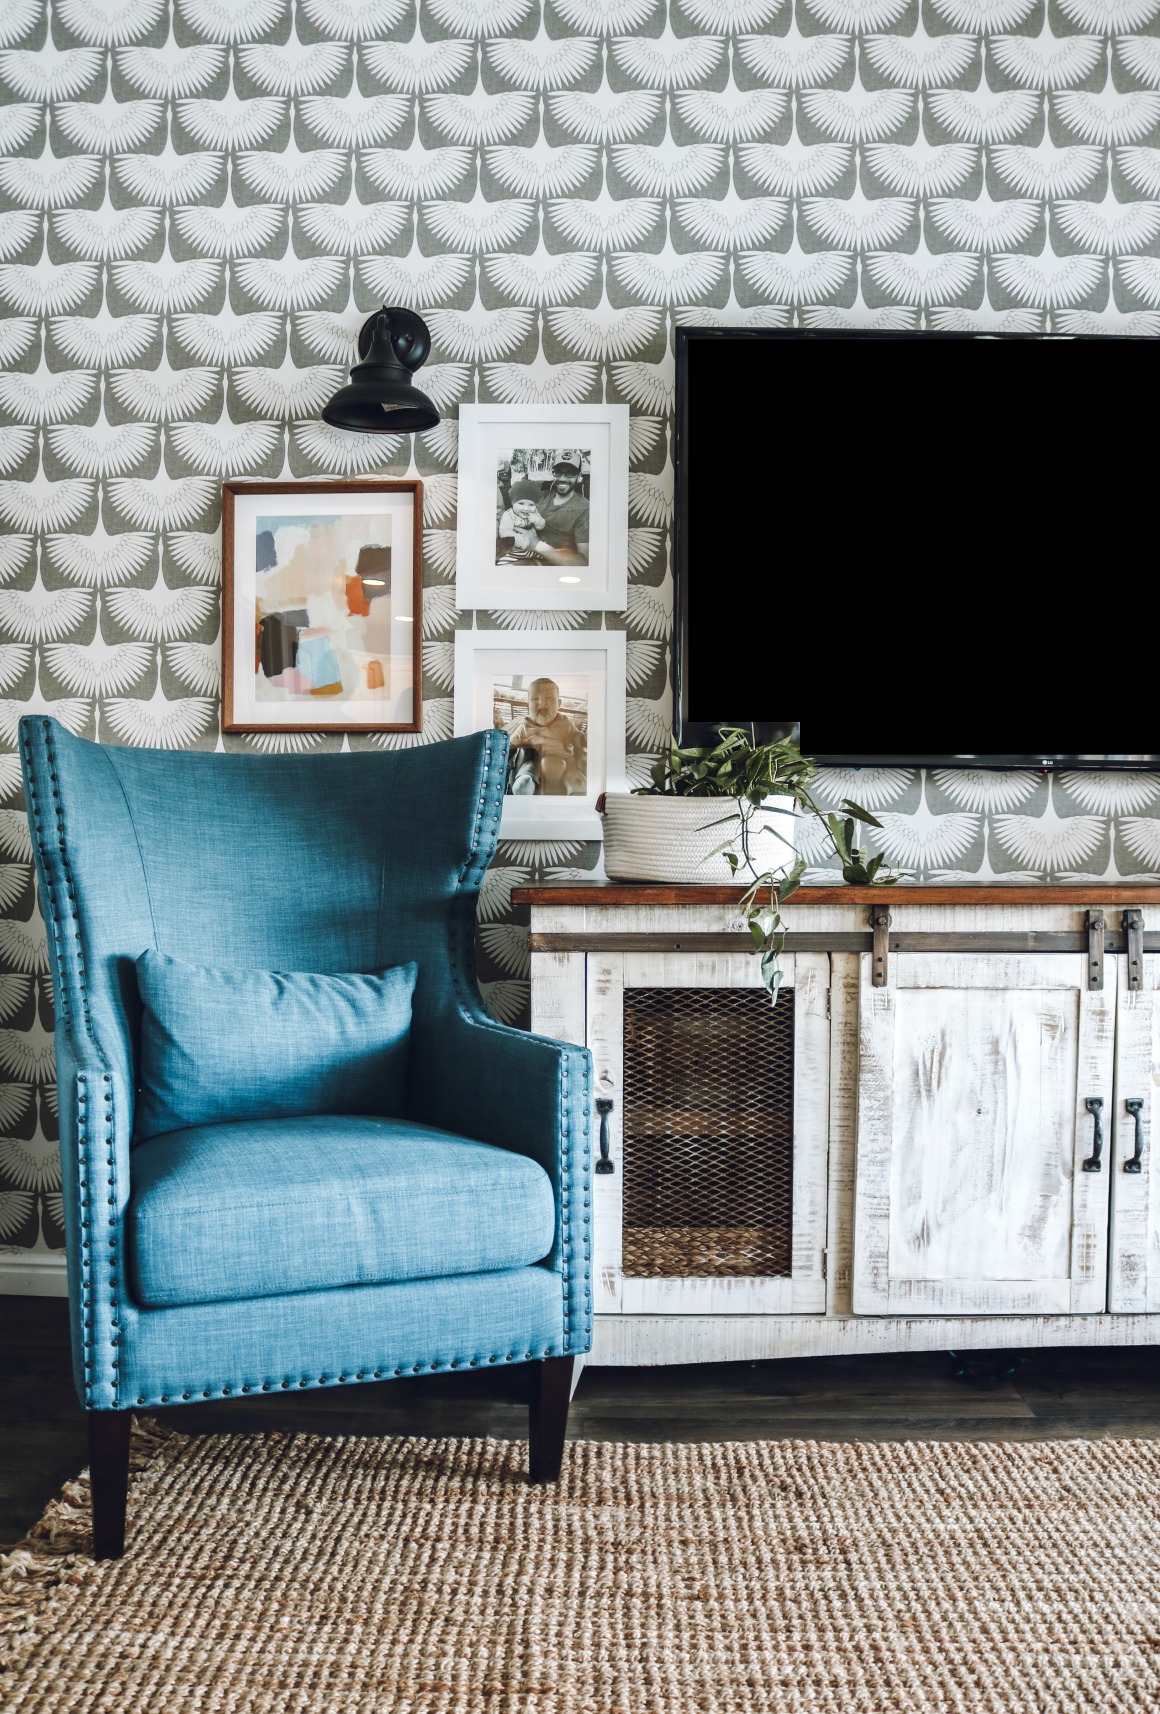 Family Room Makeover- Decorating around a TV